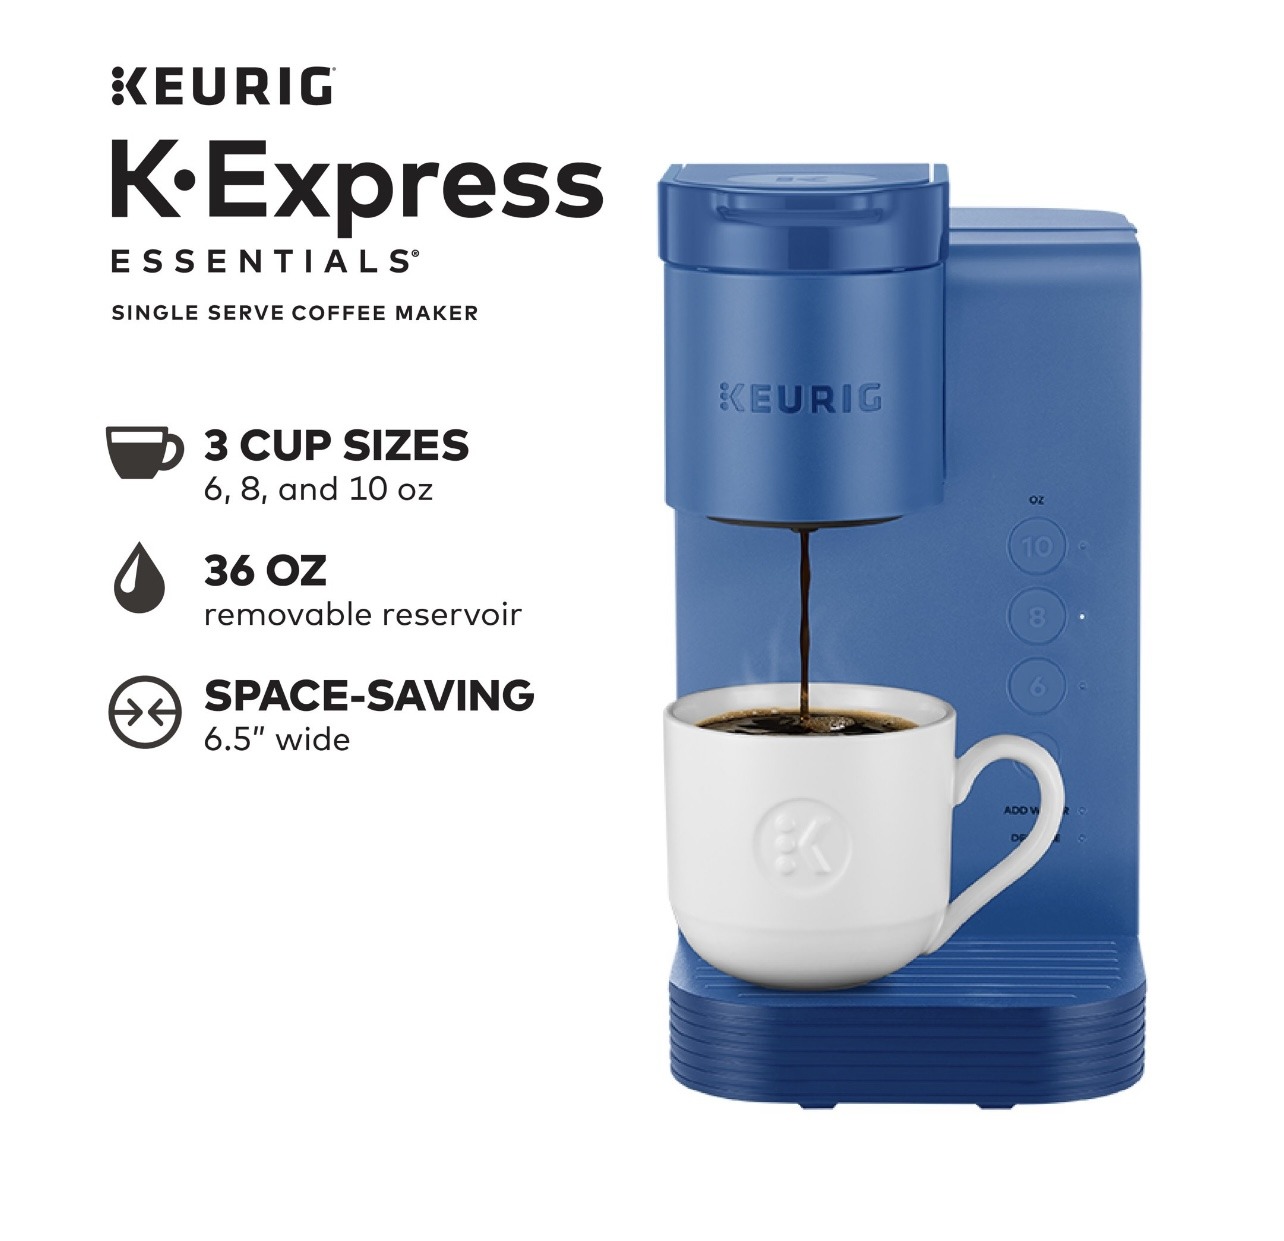 Keurig K-Express 4-Cups Single Serve Coffee Maker, Black